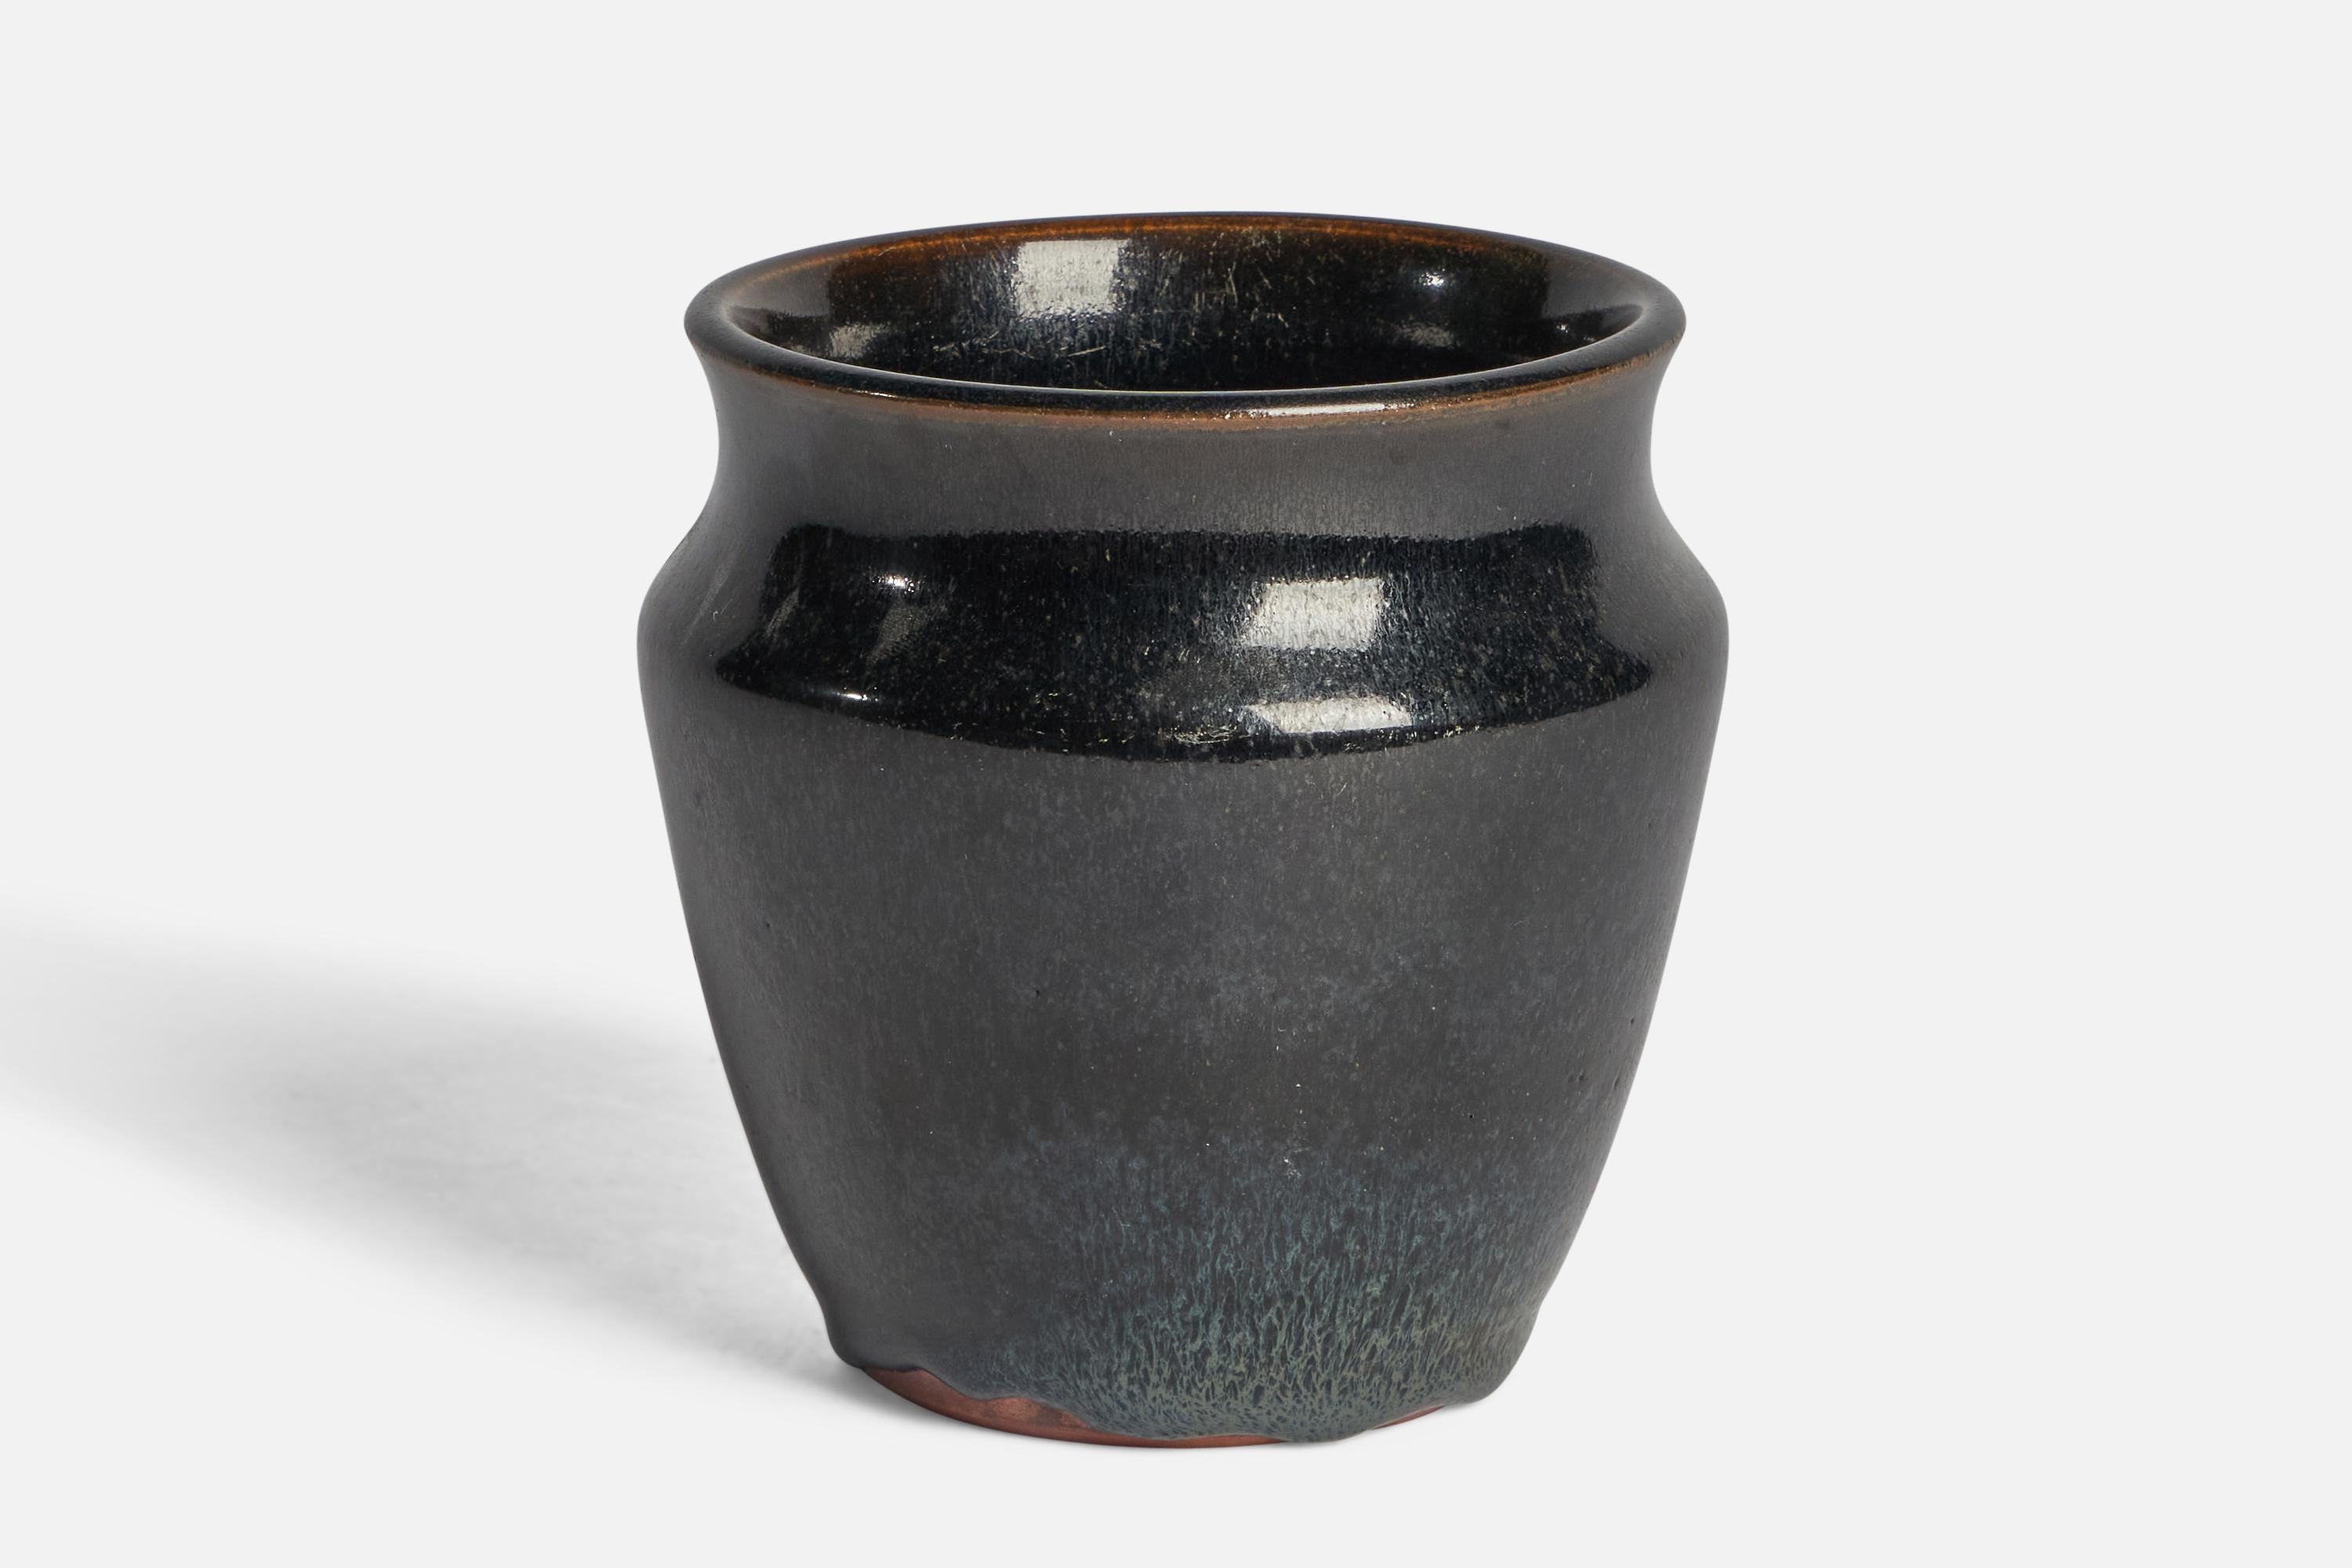 A black-glazed stoneware vase designed and produced by Rolf Palm, Mölle, Sweden, 1990.